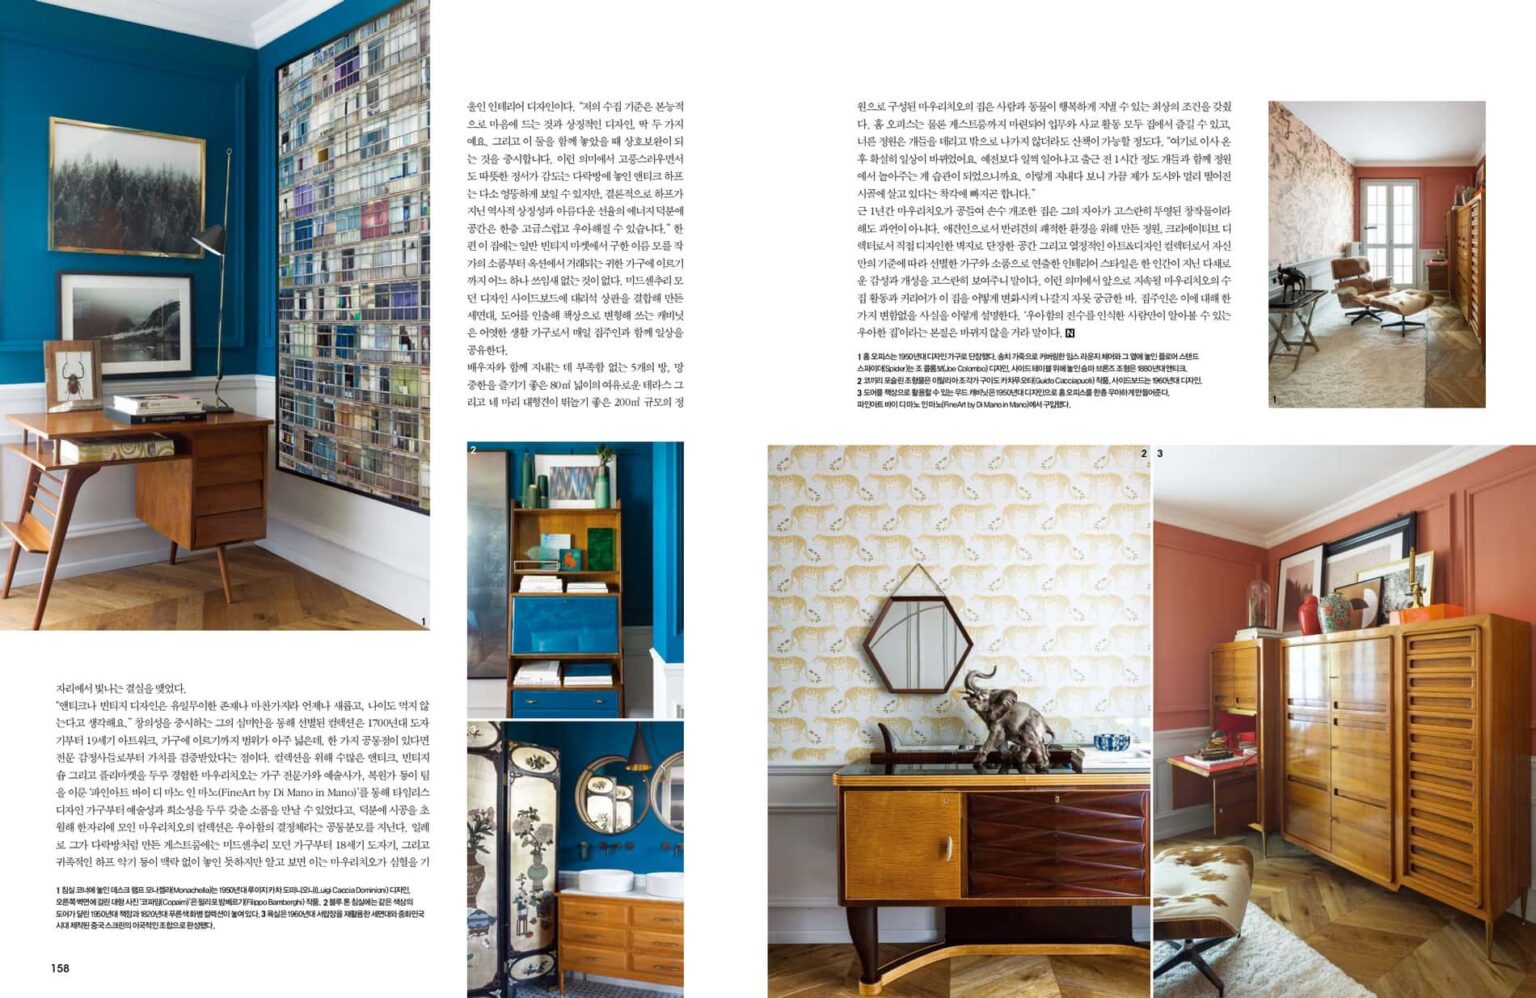 Neighbor-Magazine-Korea-ottobre_pages-to-jpg-0003 (1)